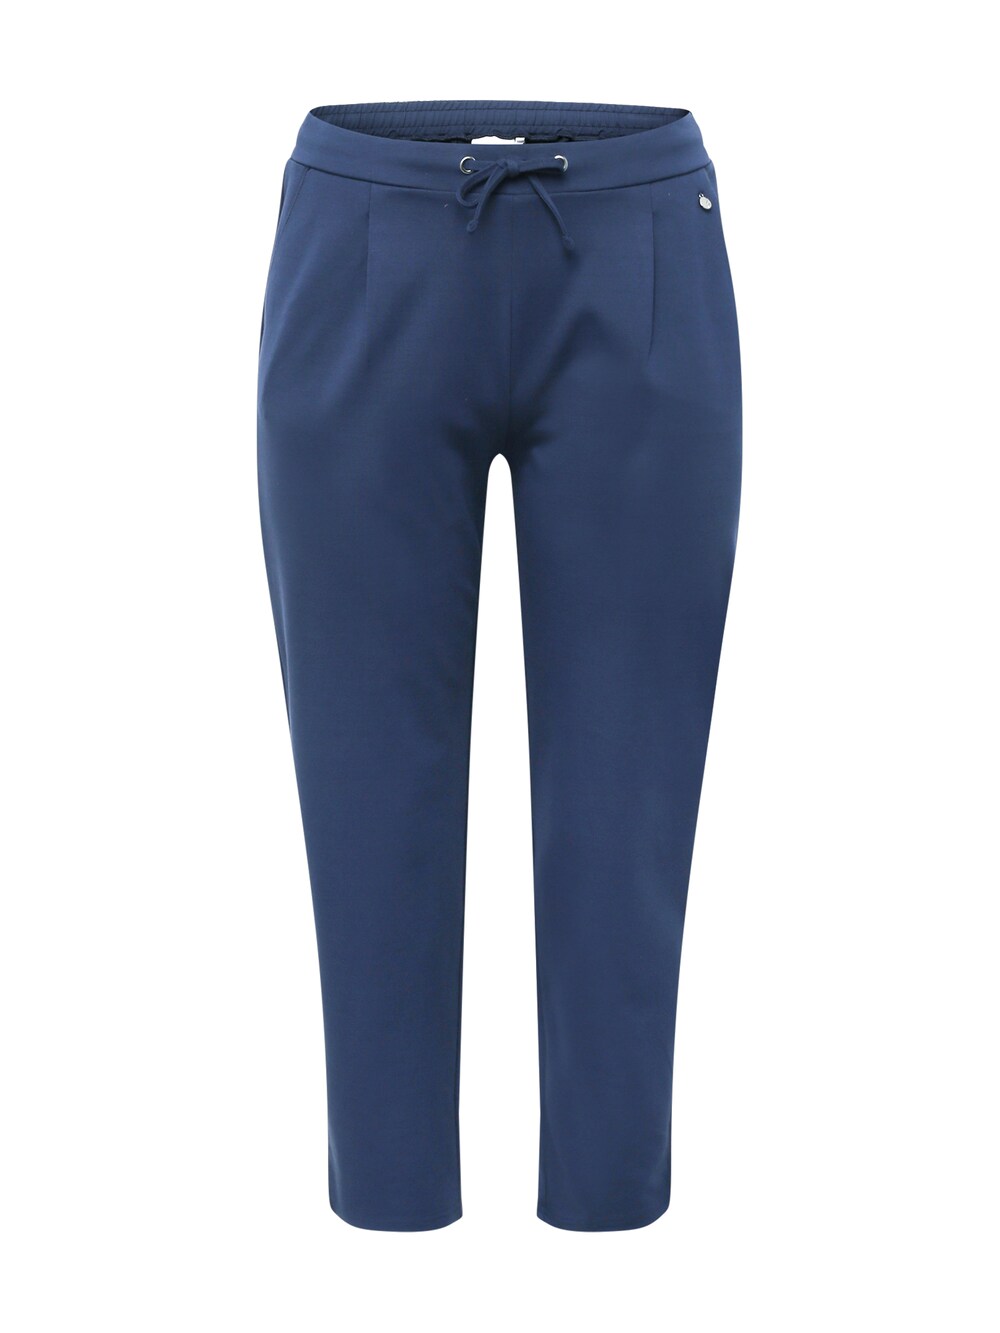 Узкие брюки со складками спереди Fransa Curve STRETCH, темно-синий платье fransa темно синий меланж